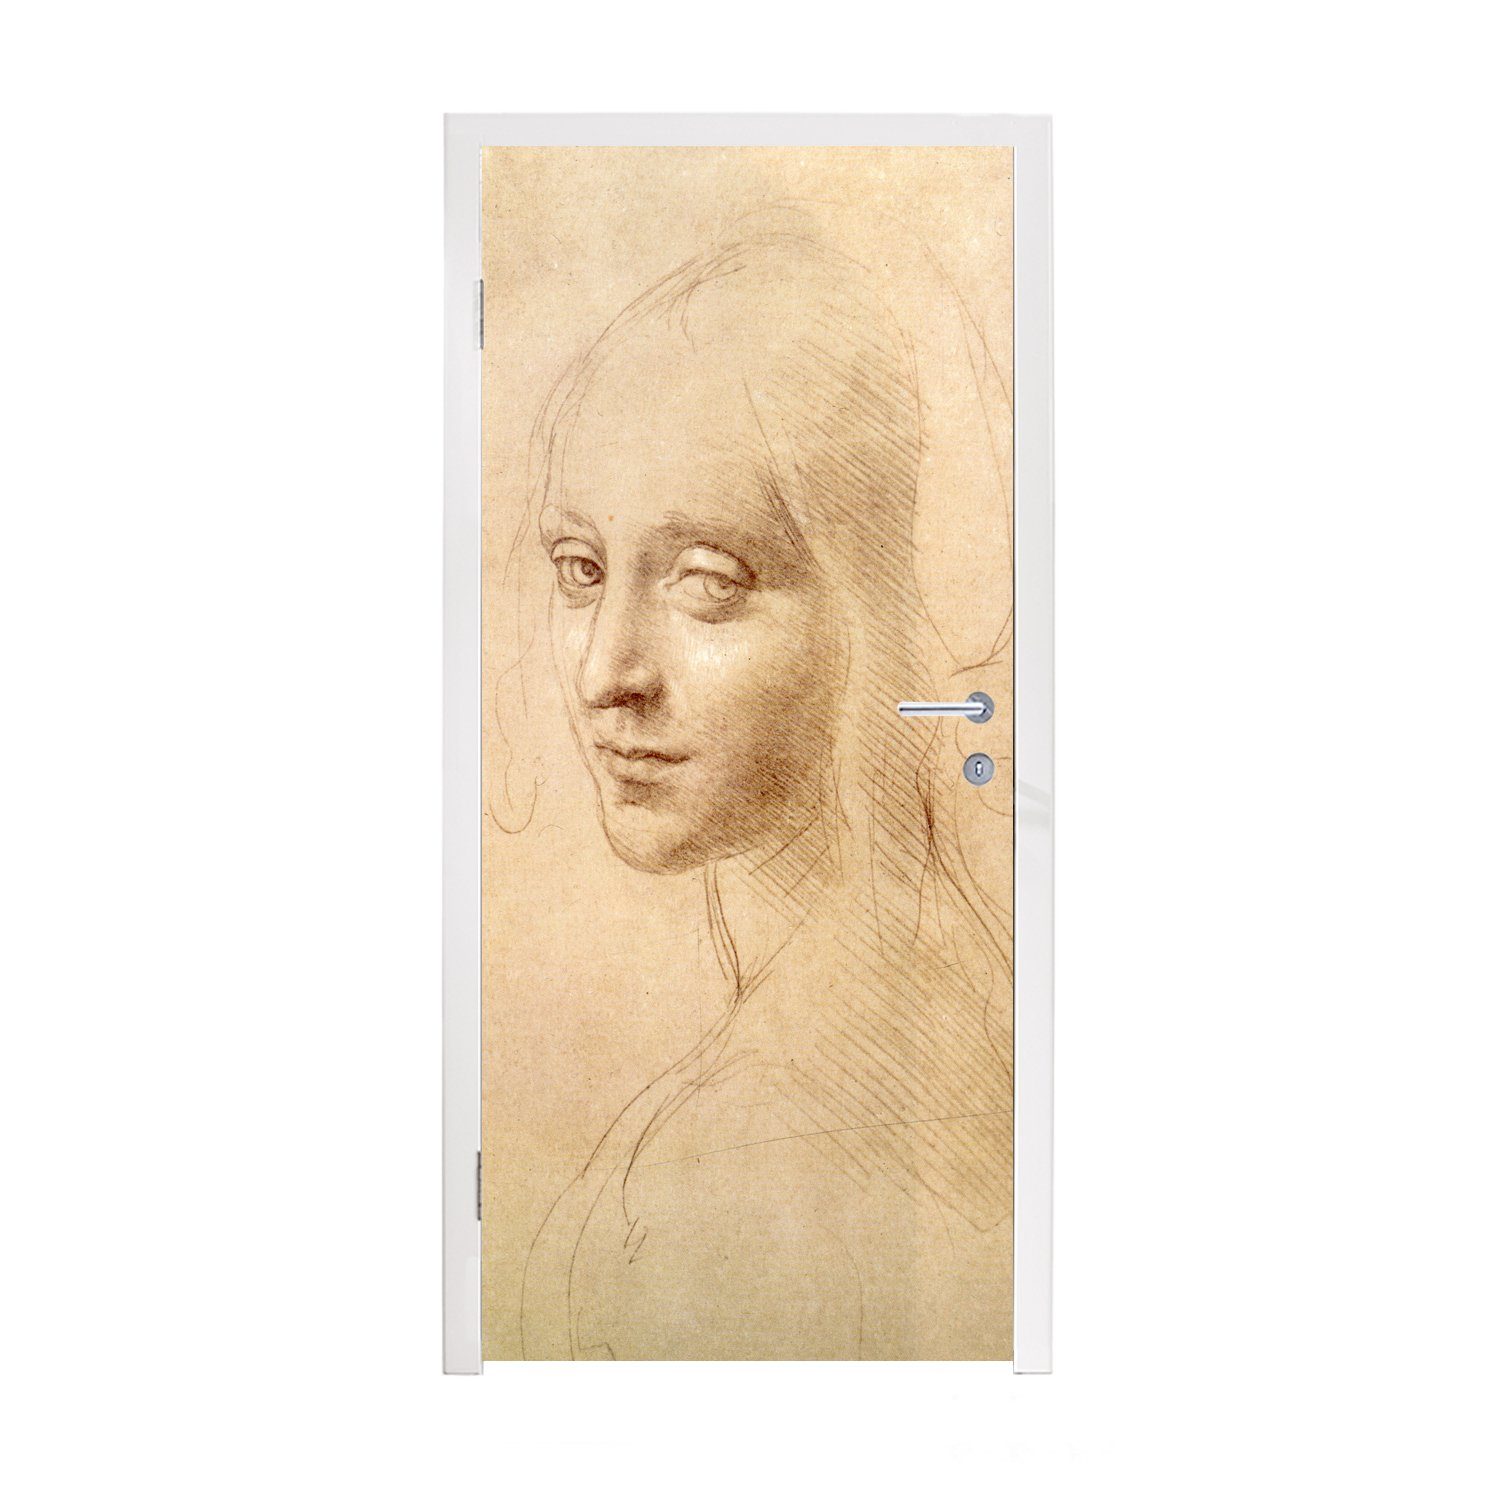 MuchoWow Türtapete Skizze - Leonardo da Vinci, Matt, bedruckt, (1 St), Fototapete für Tür, Türaufkleber, 75x205 cm